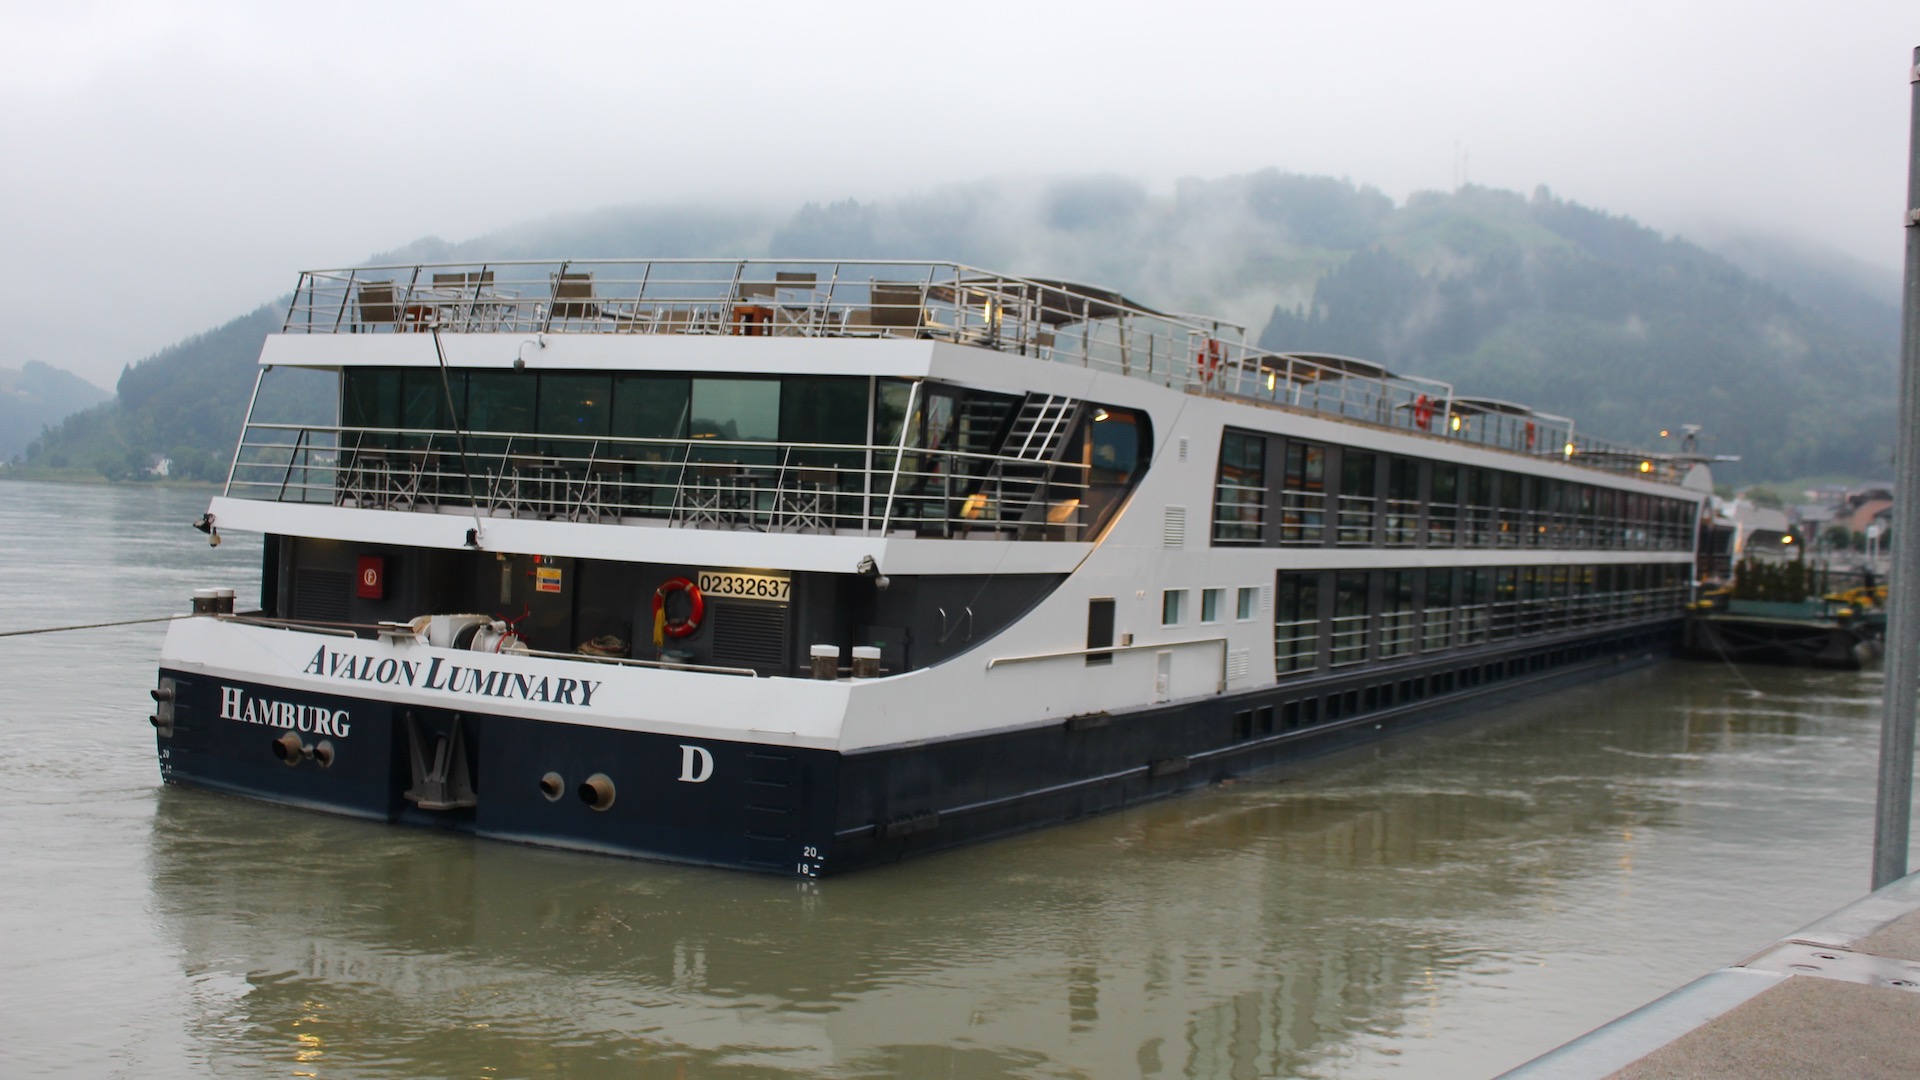 Avalon River Cruise - Danube River Cruising - by John Zeus